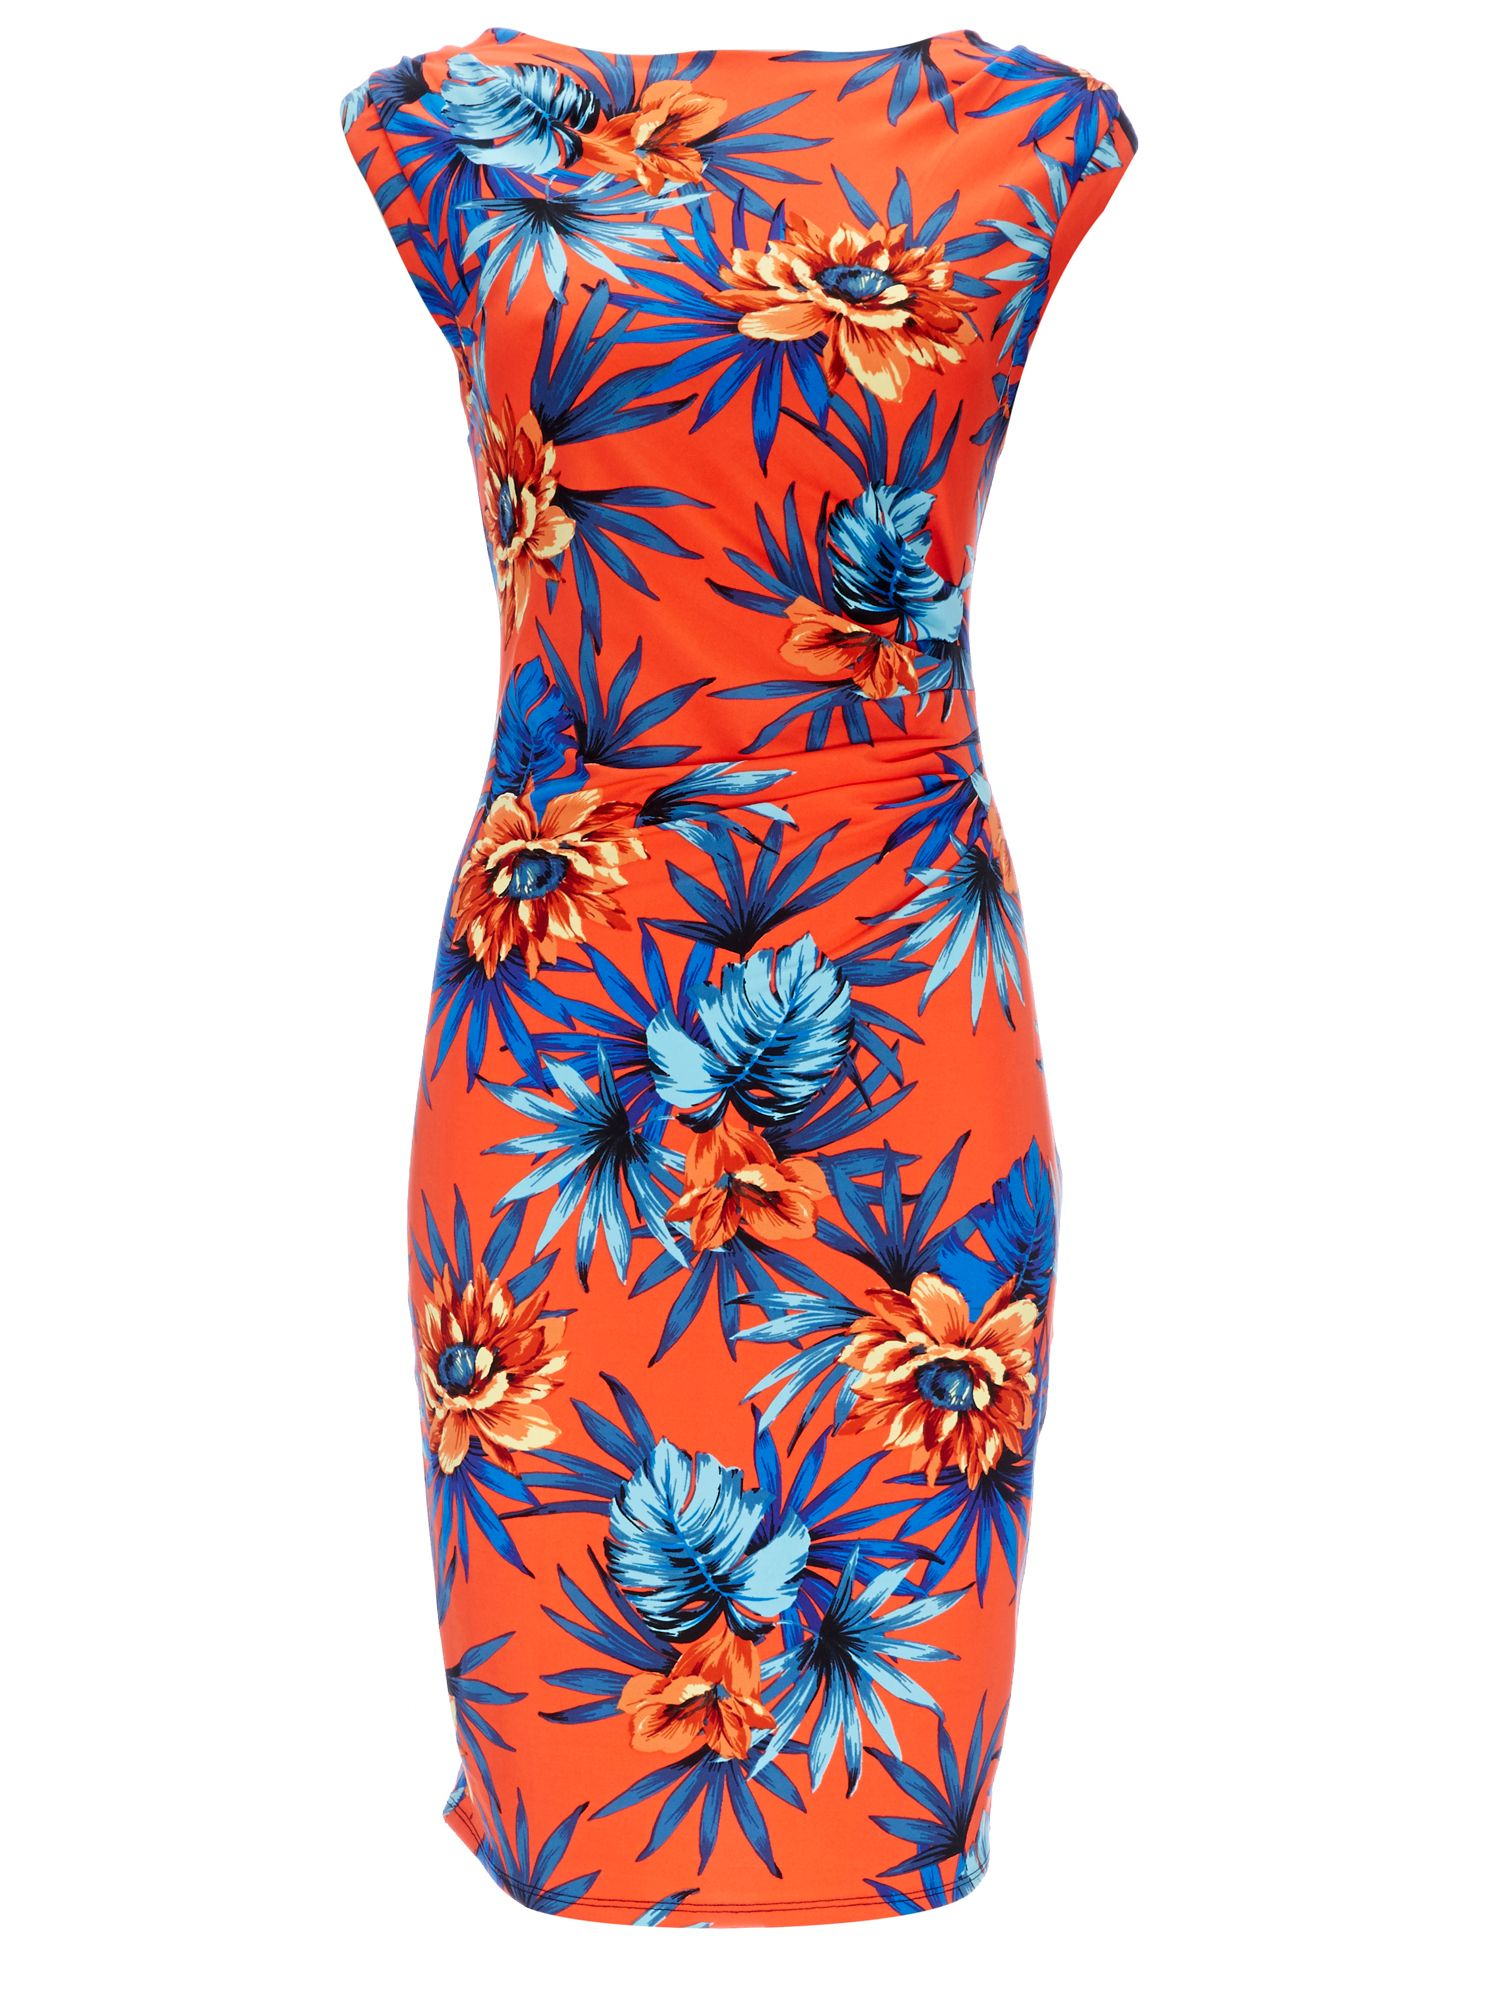 Wallis Petite Tropical Print Dress in Orange (Multi-Coloured) | Lyst